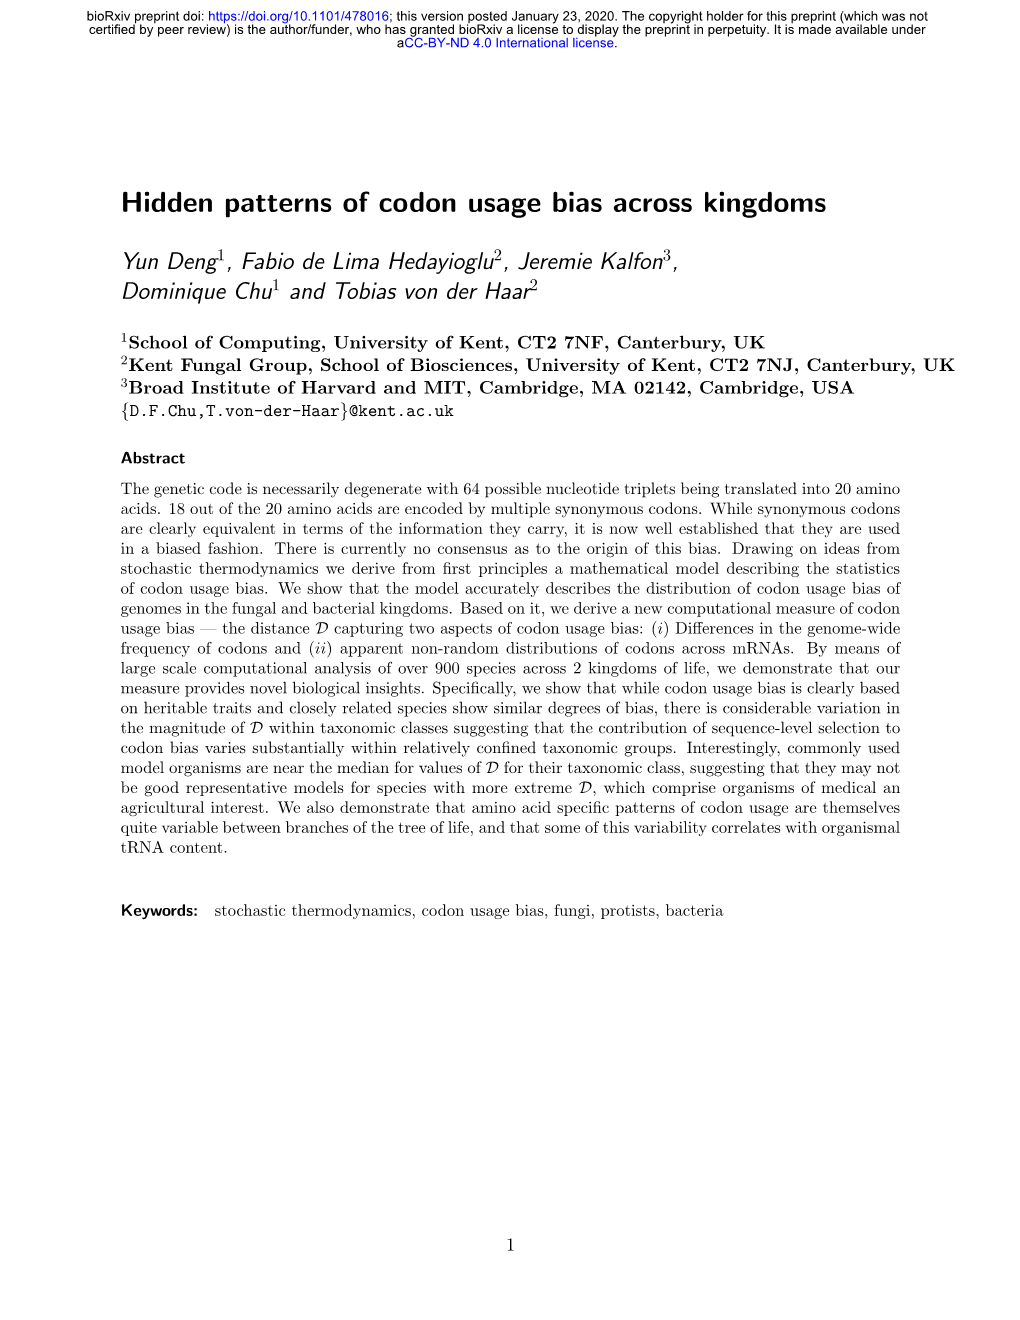 Hidden Patterns of Codon Usage Bias Across Kingdoms